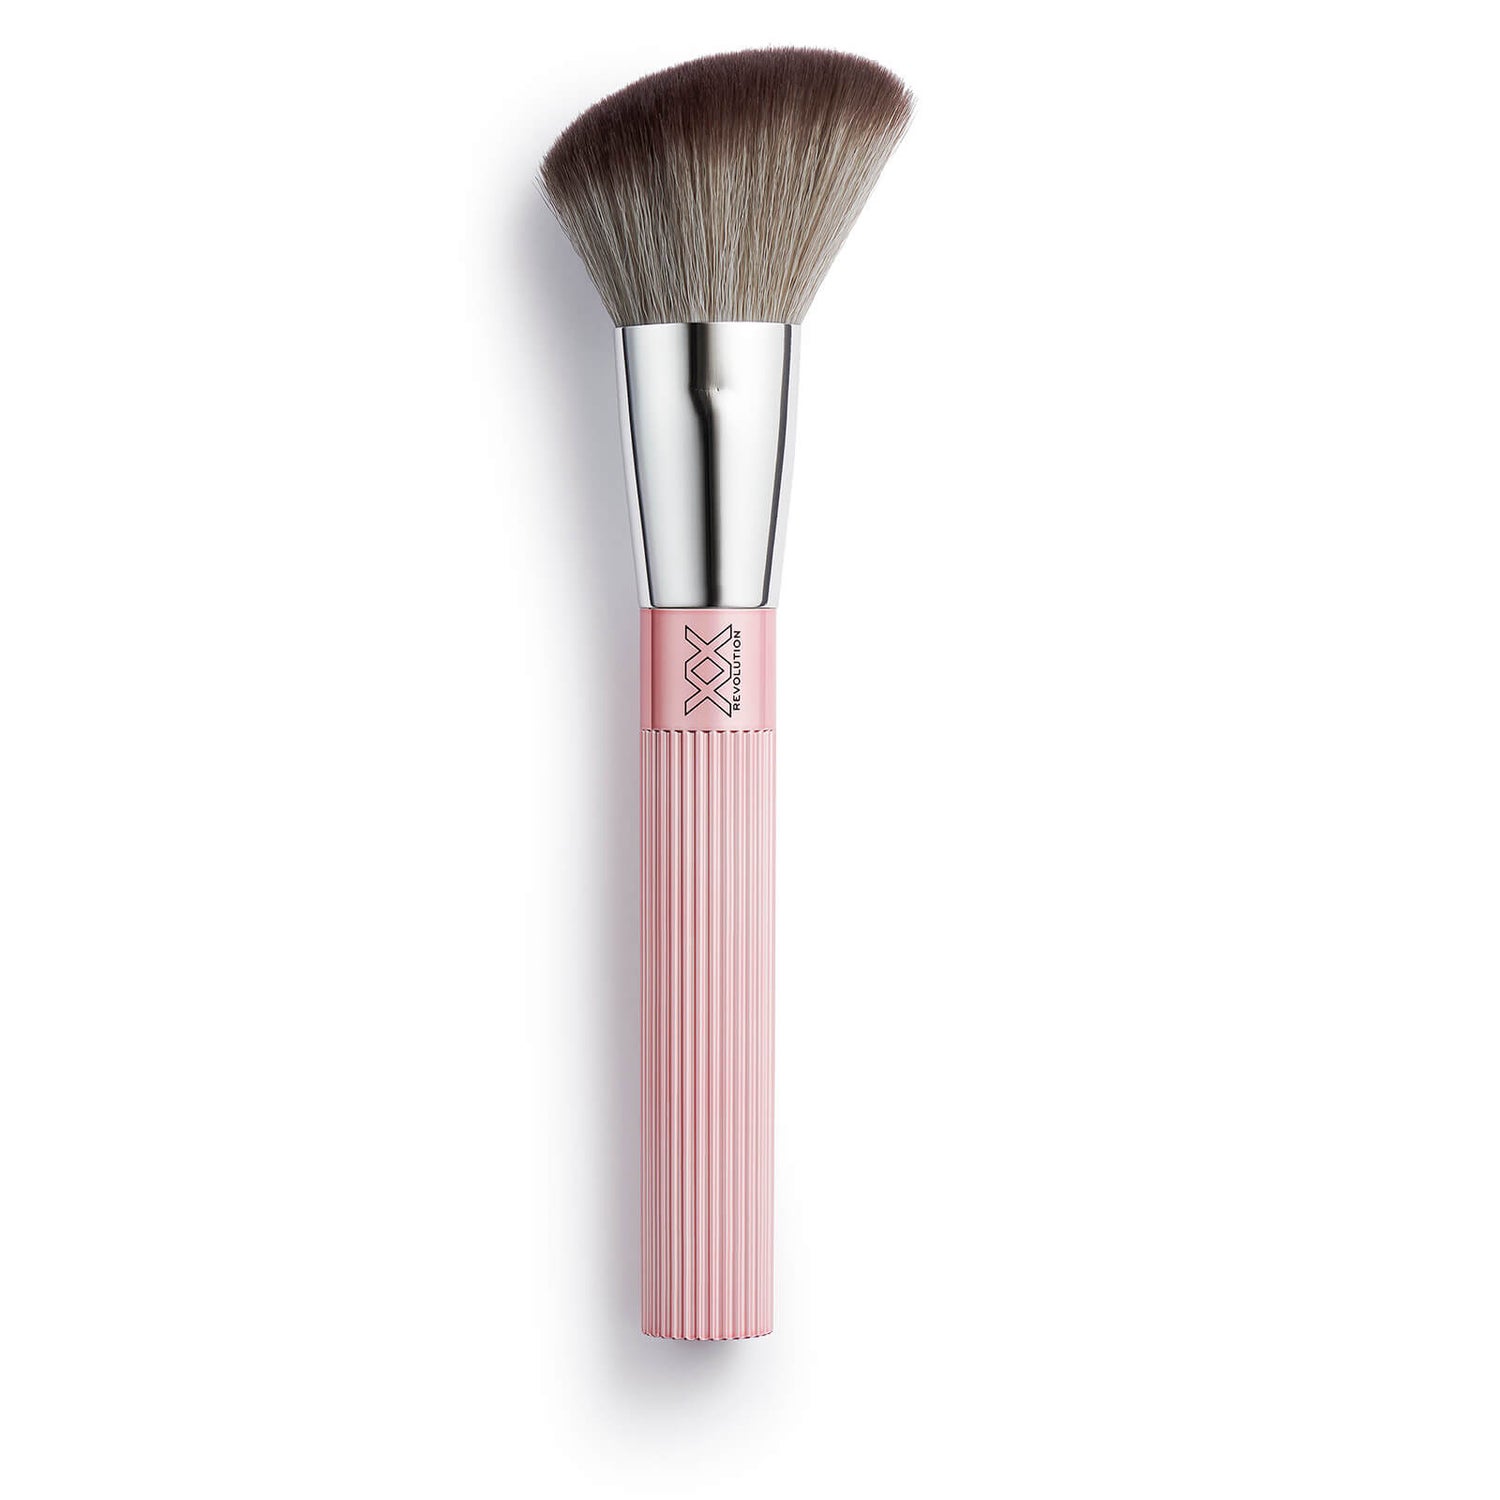 Xx Revolution Xxpert Brushes 'The Professional' Soft Focus Angled Face Powder Brush